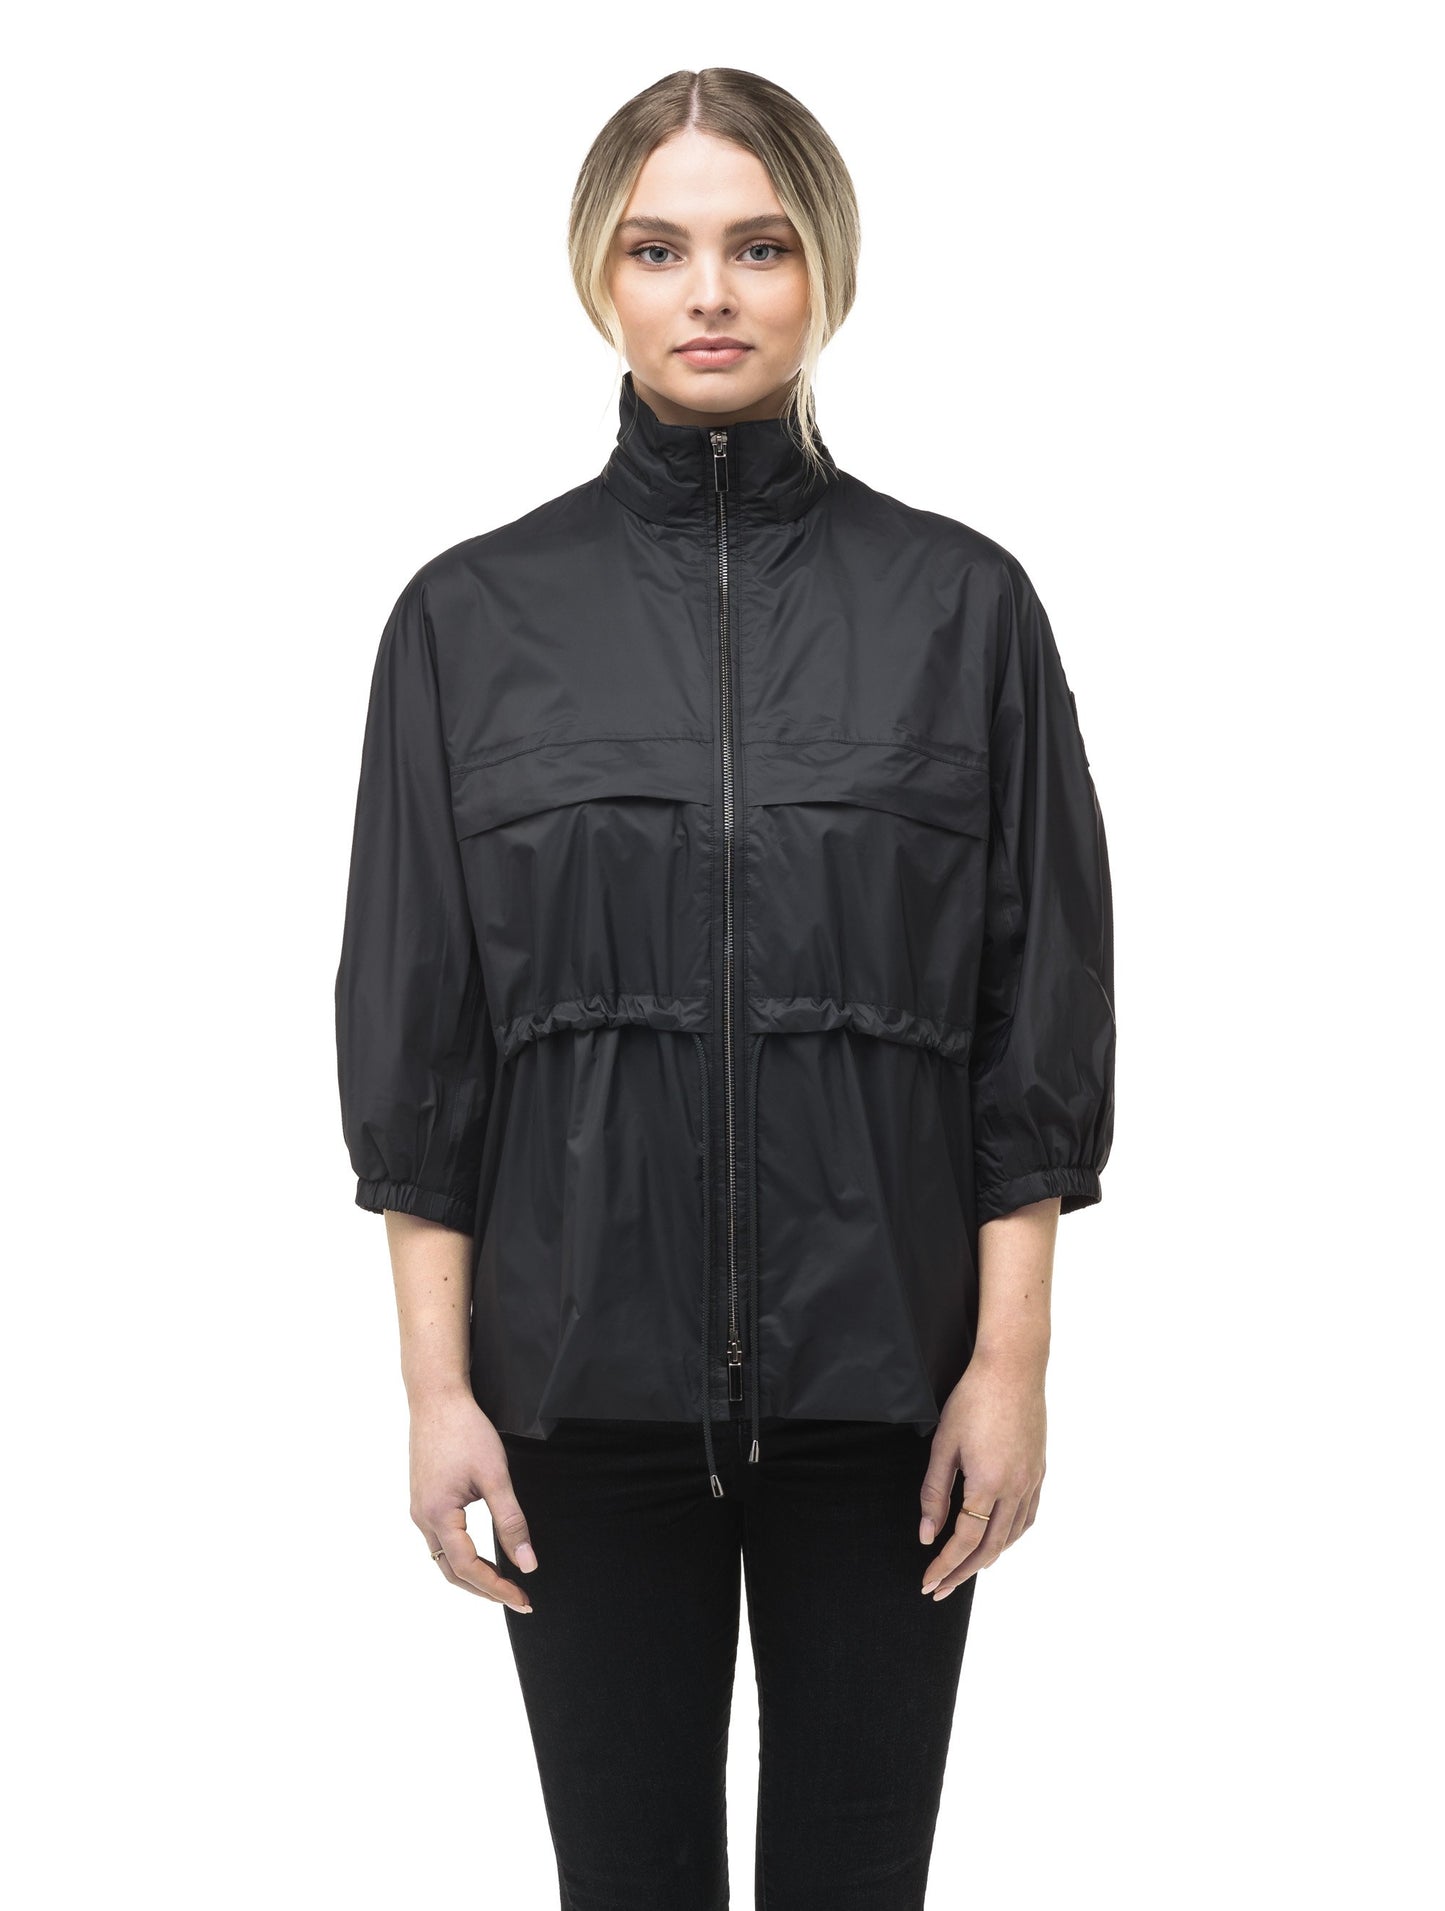 Women's waist length windbreaker with two chest pockets in Black